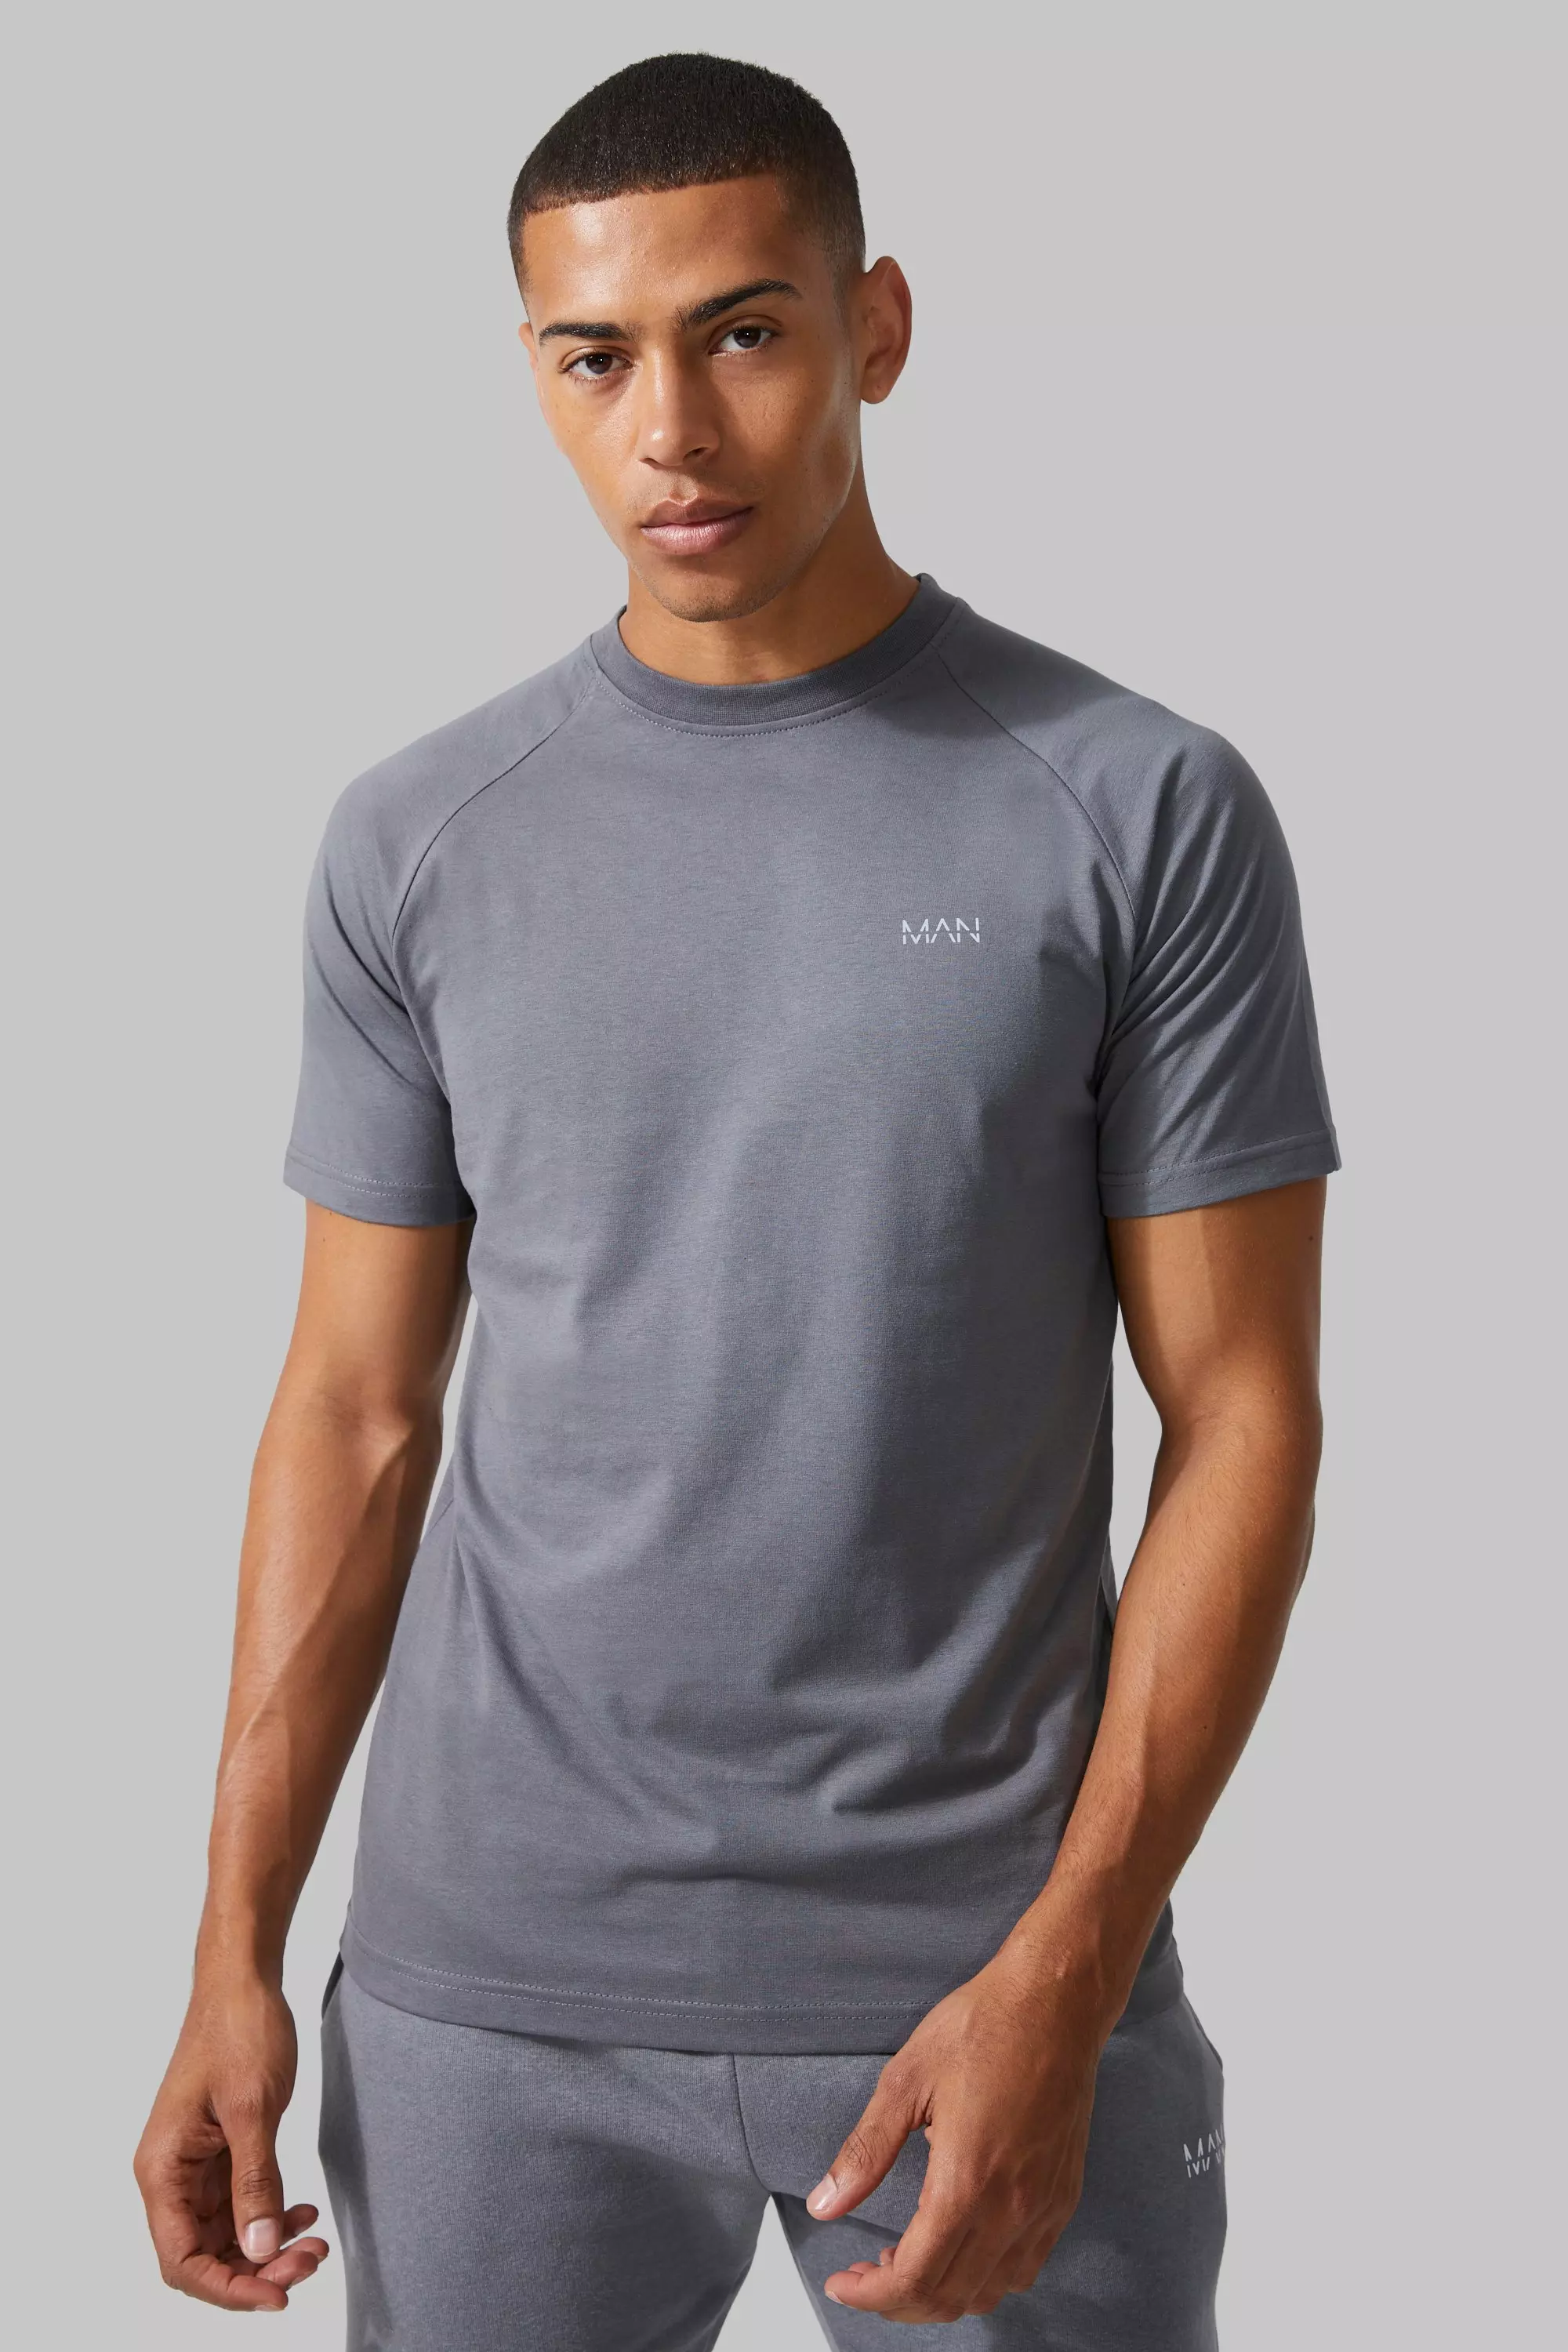 Man Active Gym Raglan T-shirt Charcoal